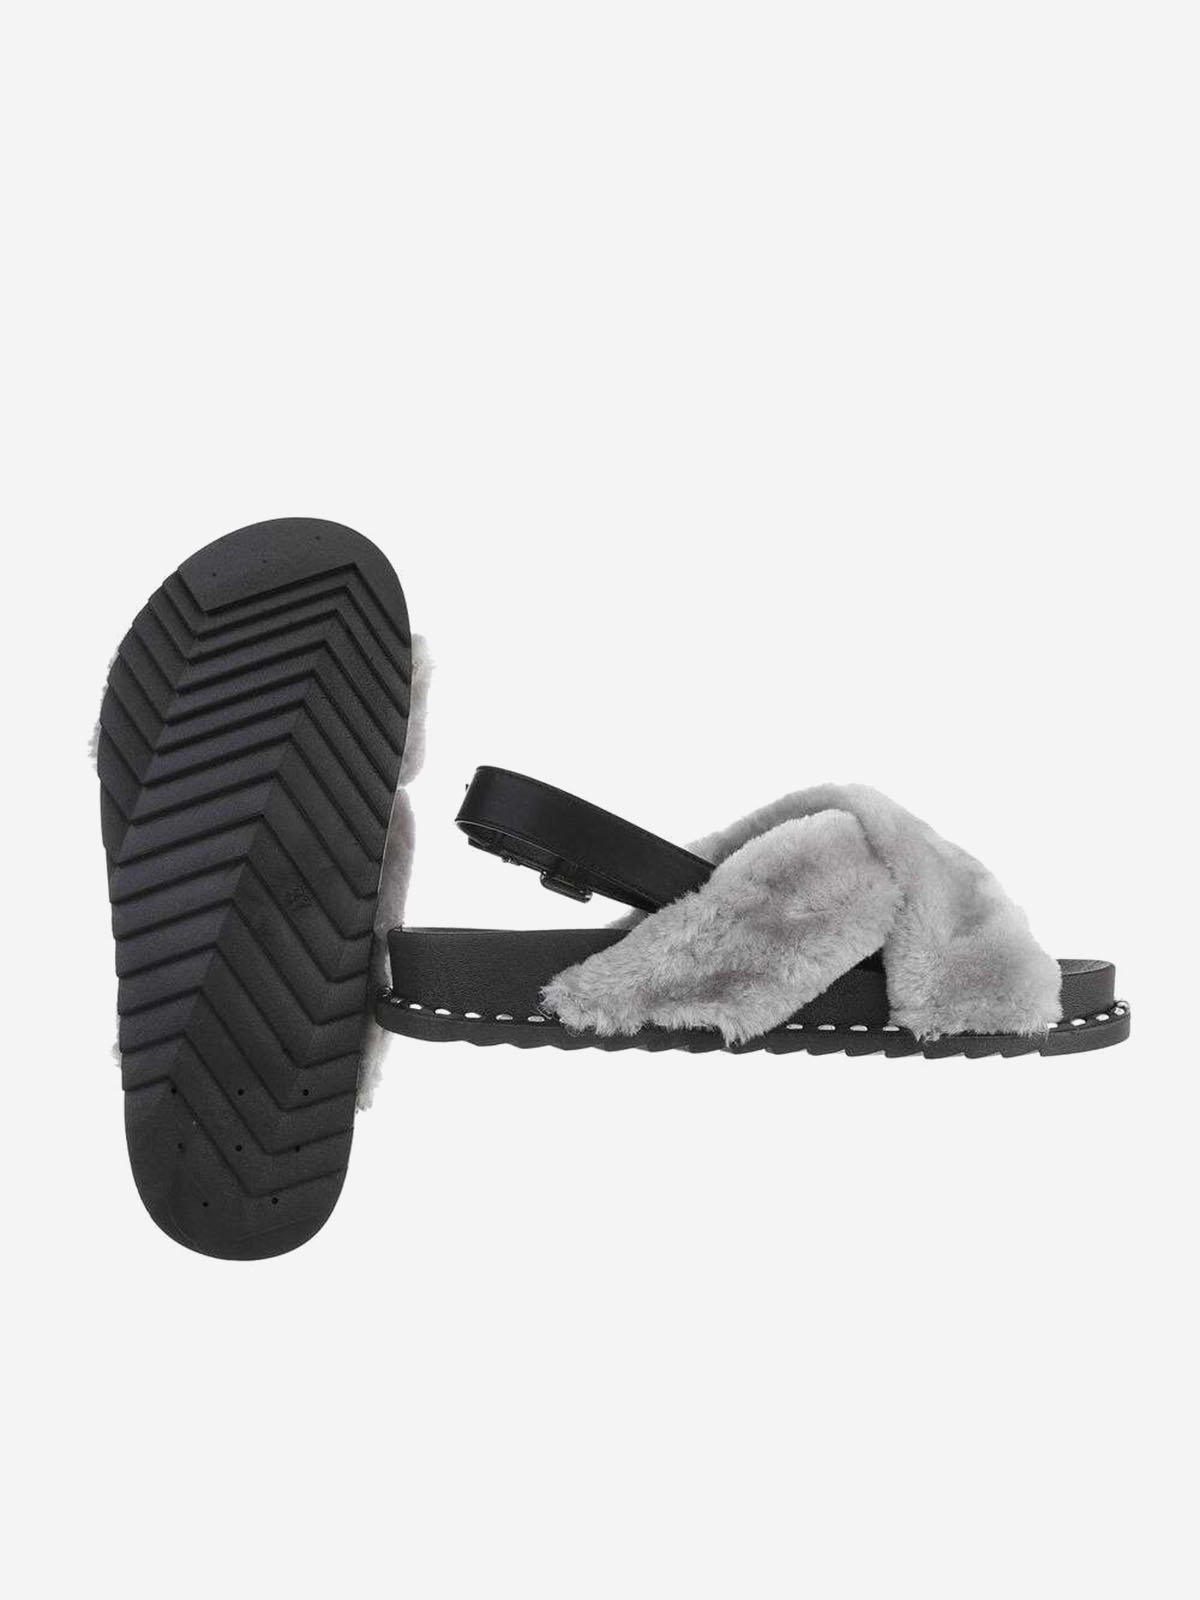 Stylish adjustable sandals with medium platform in grey